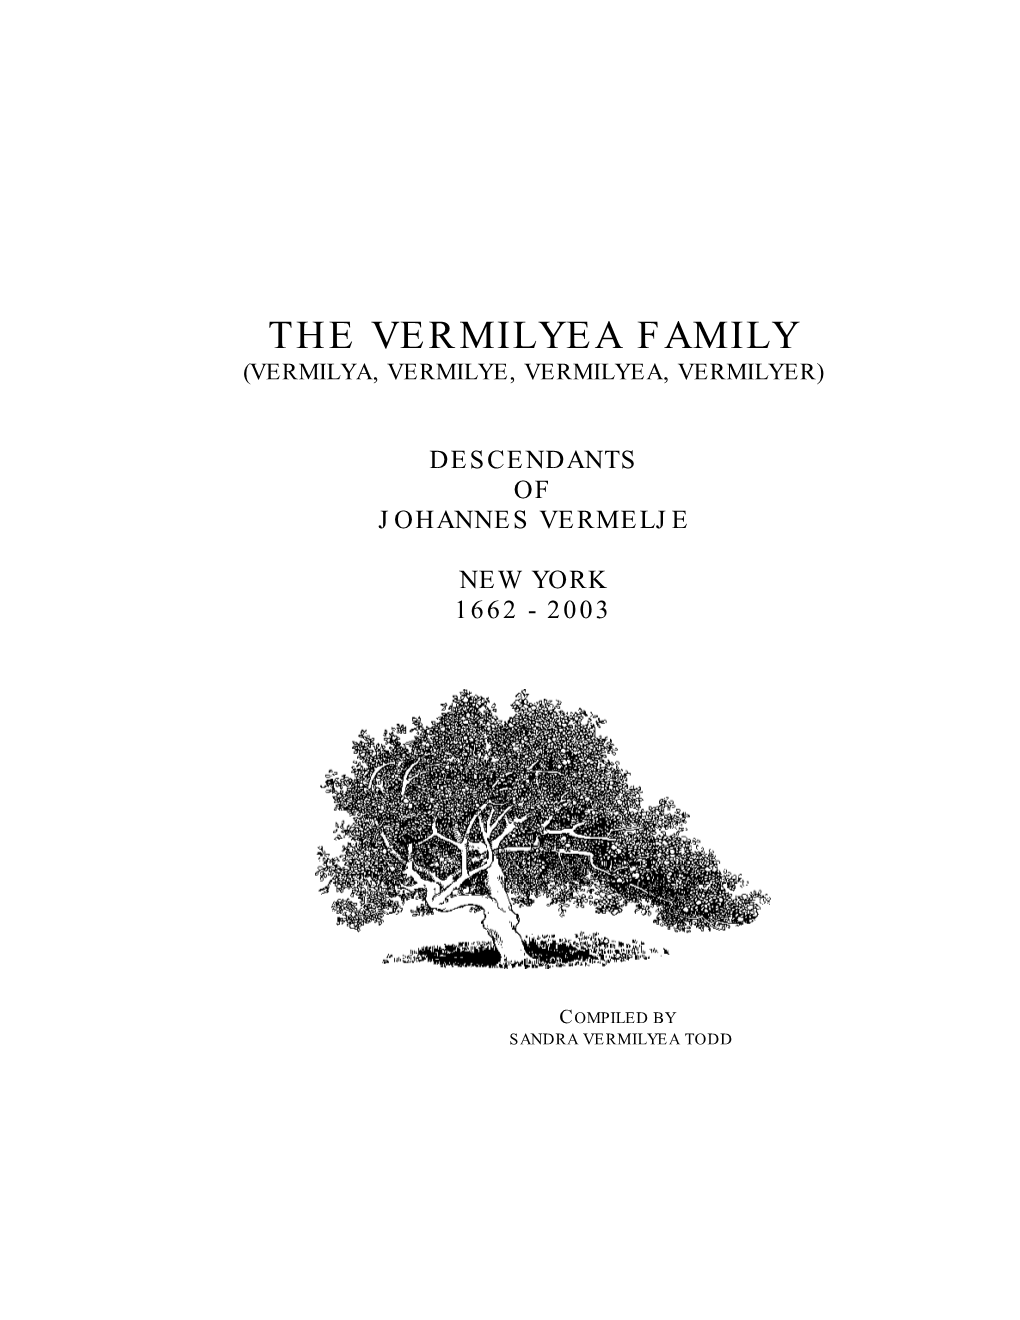 The Vermilyea Family (Vermilya, Vermilye, Vermilyea, Vermilyer) DESCENDANTS of JOHANNAS VERMELJE